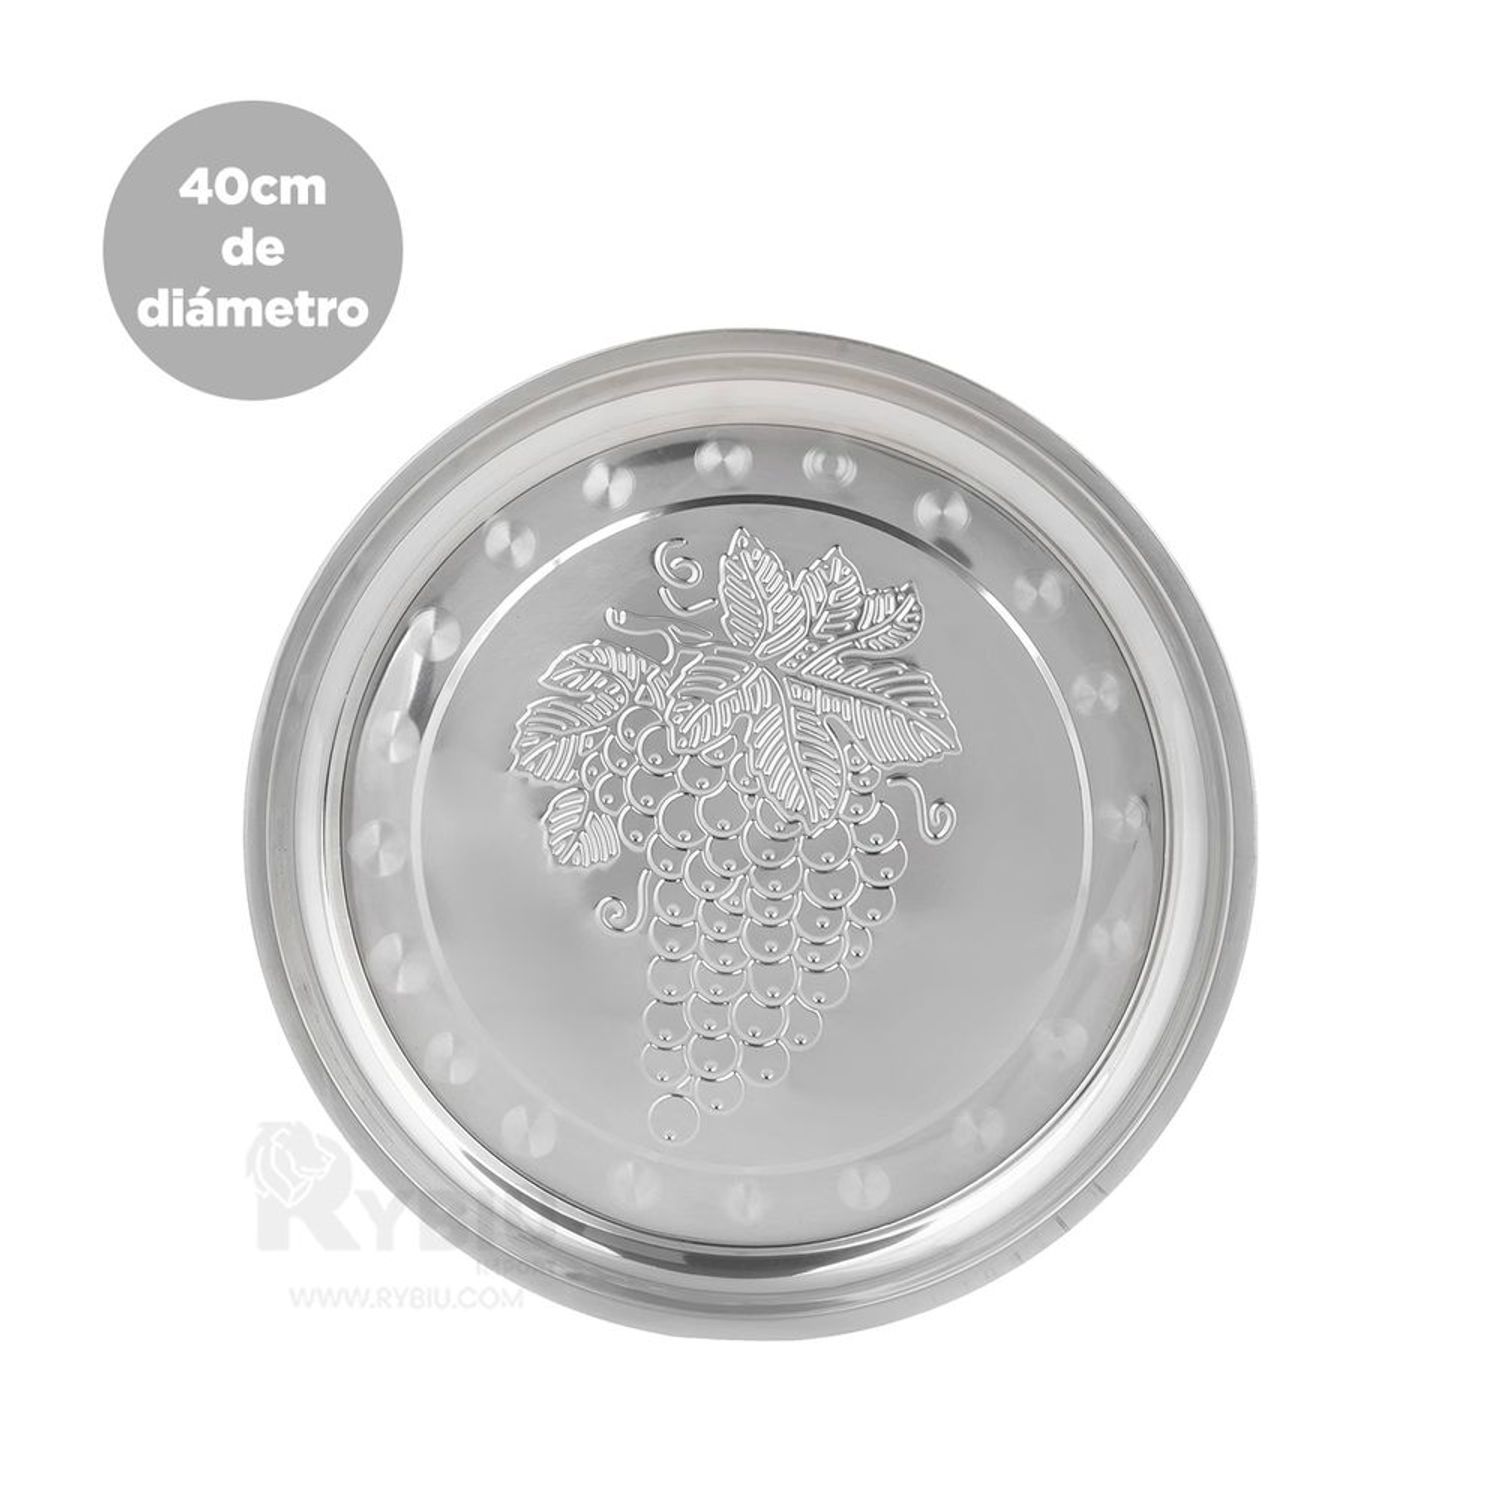 Bandeja decorativa de 29 cm de diámetro, placa redonda de perfume